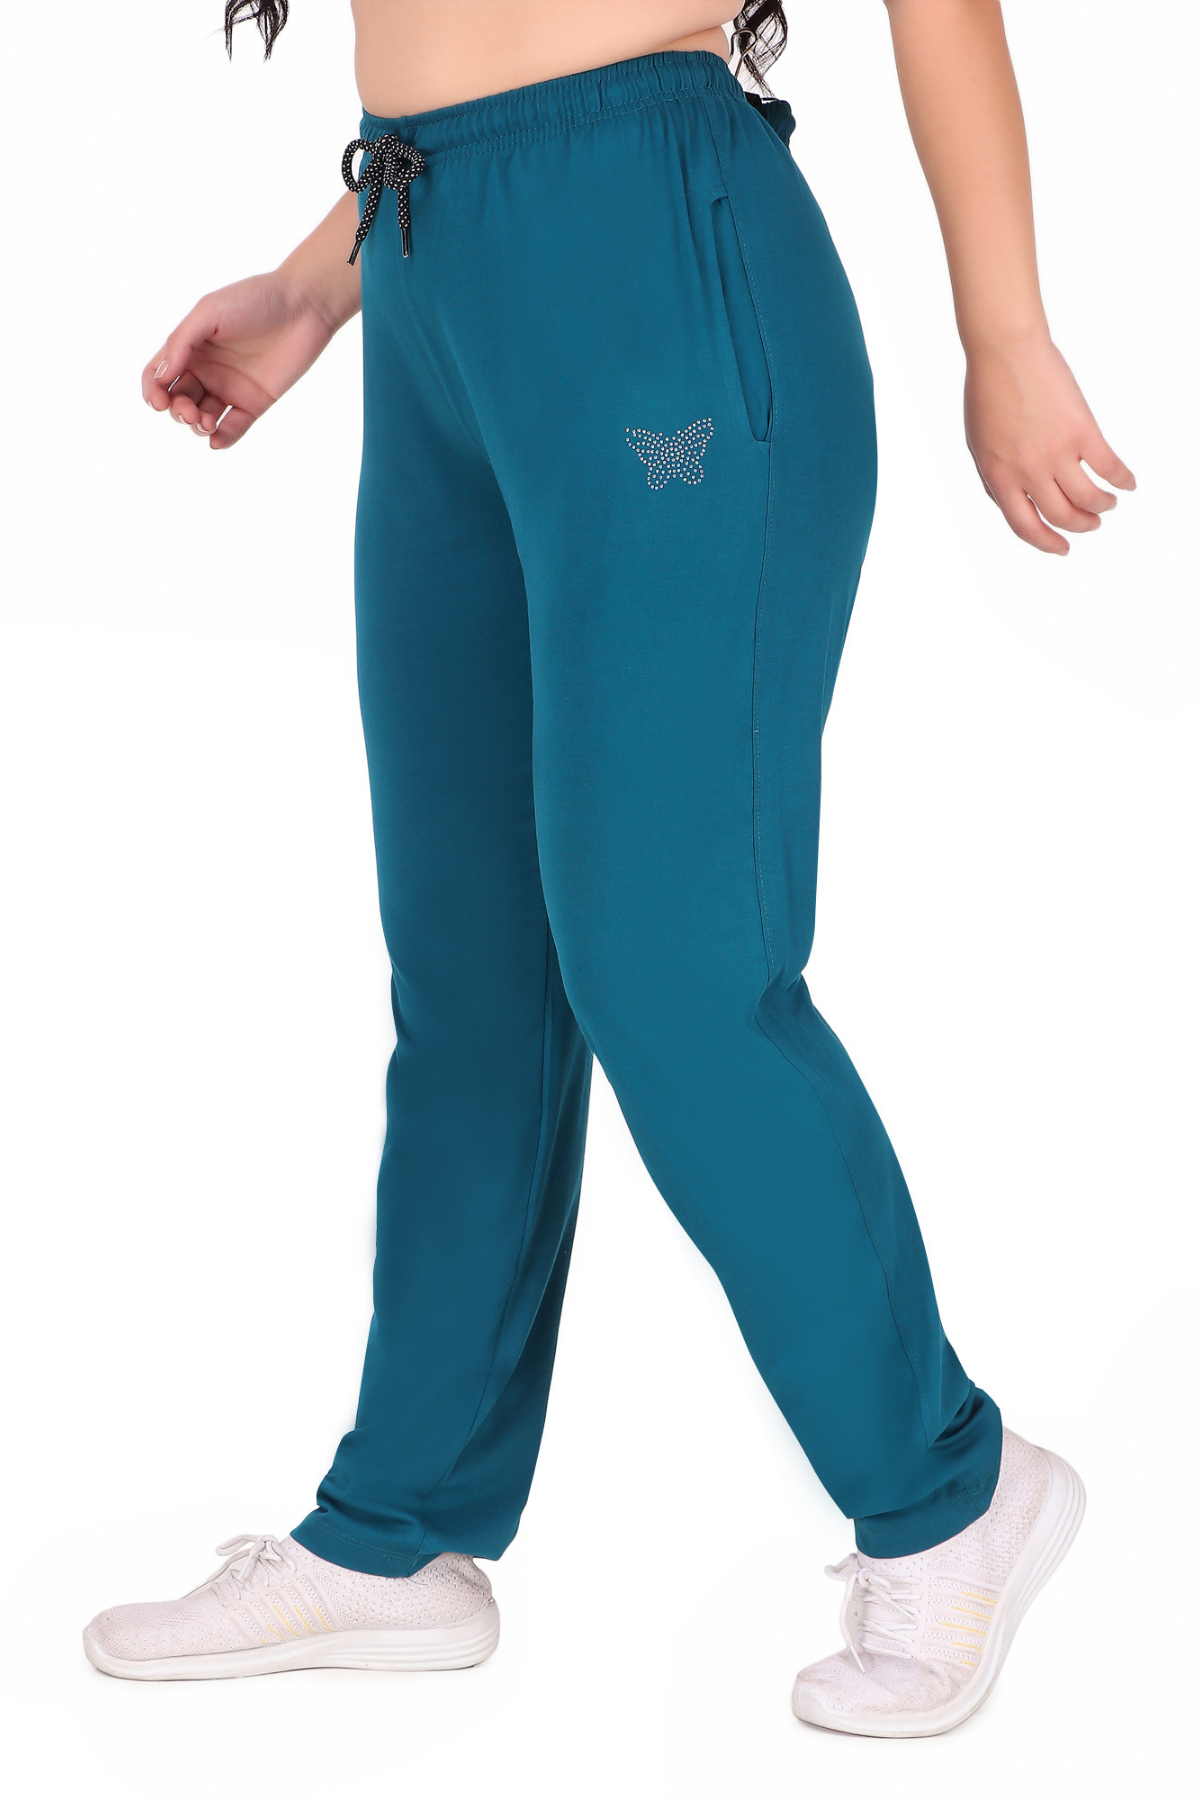 Buy Studiofit Solid Blue Track Pants from Westside